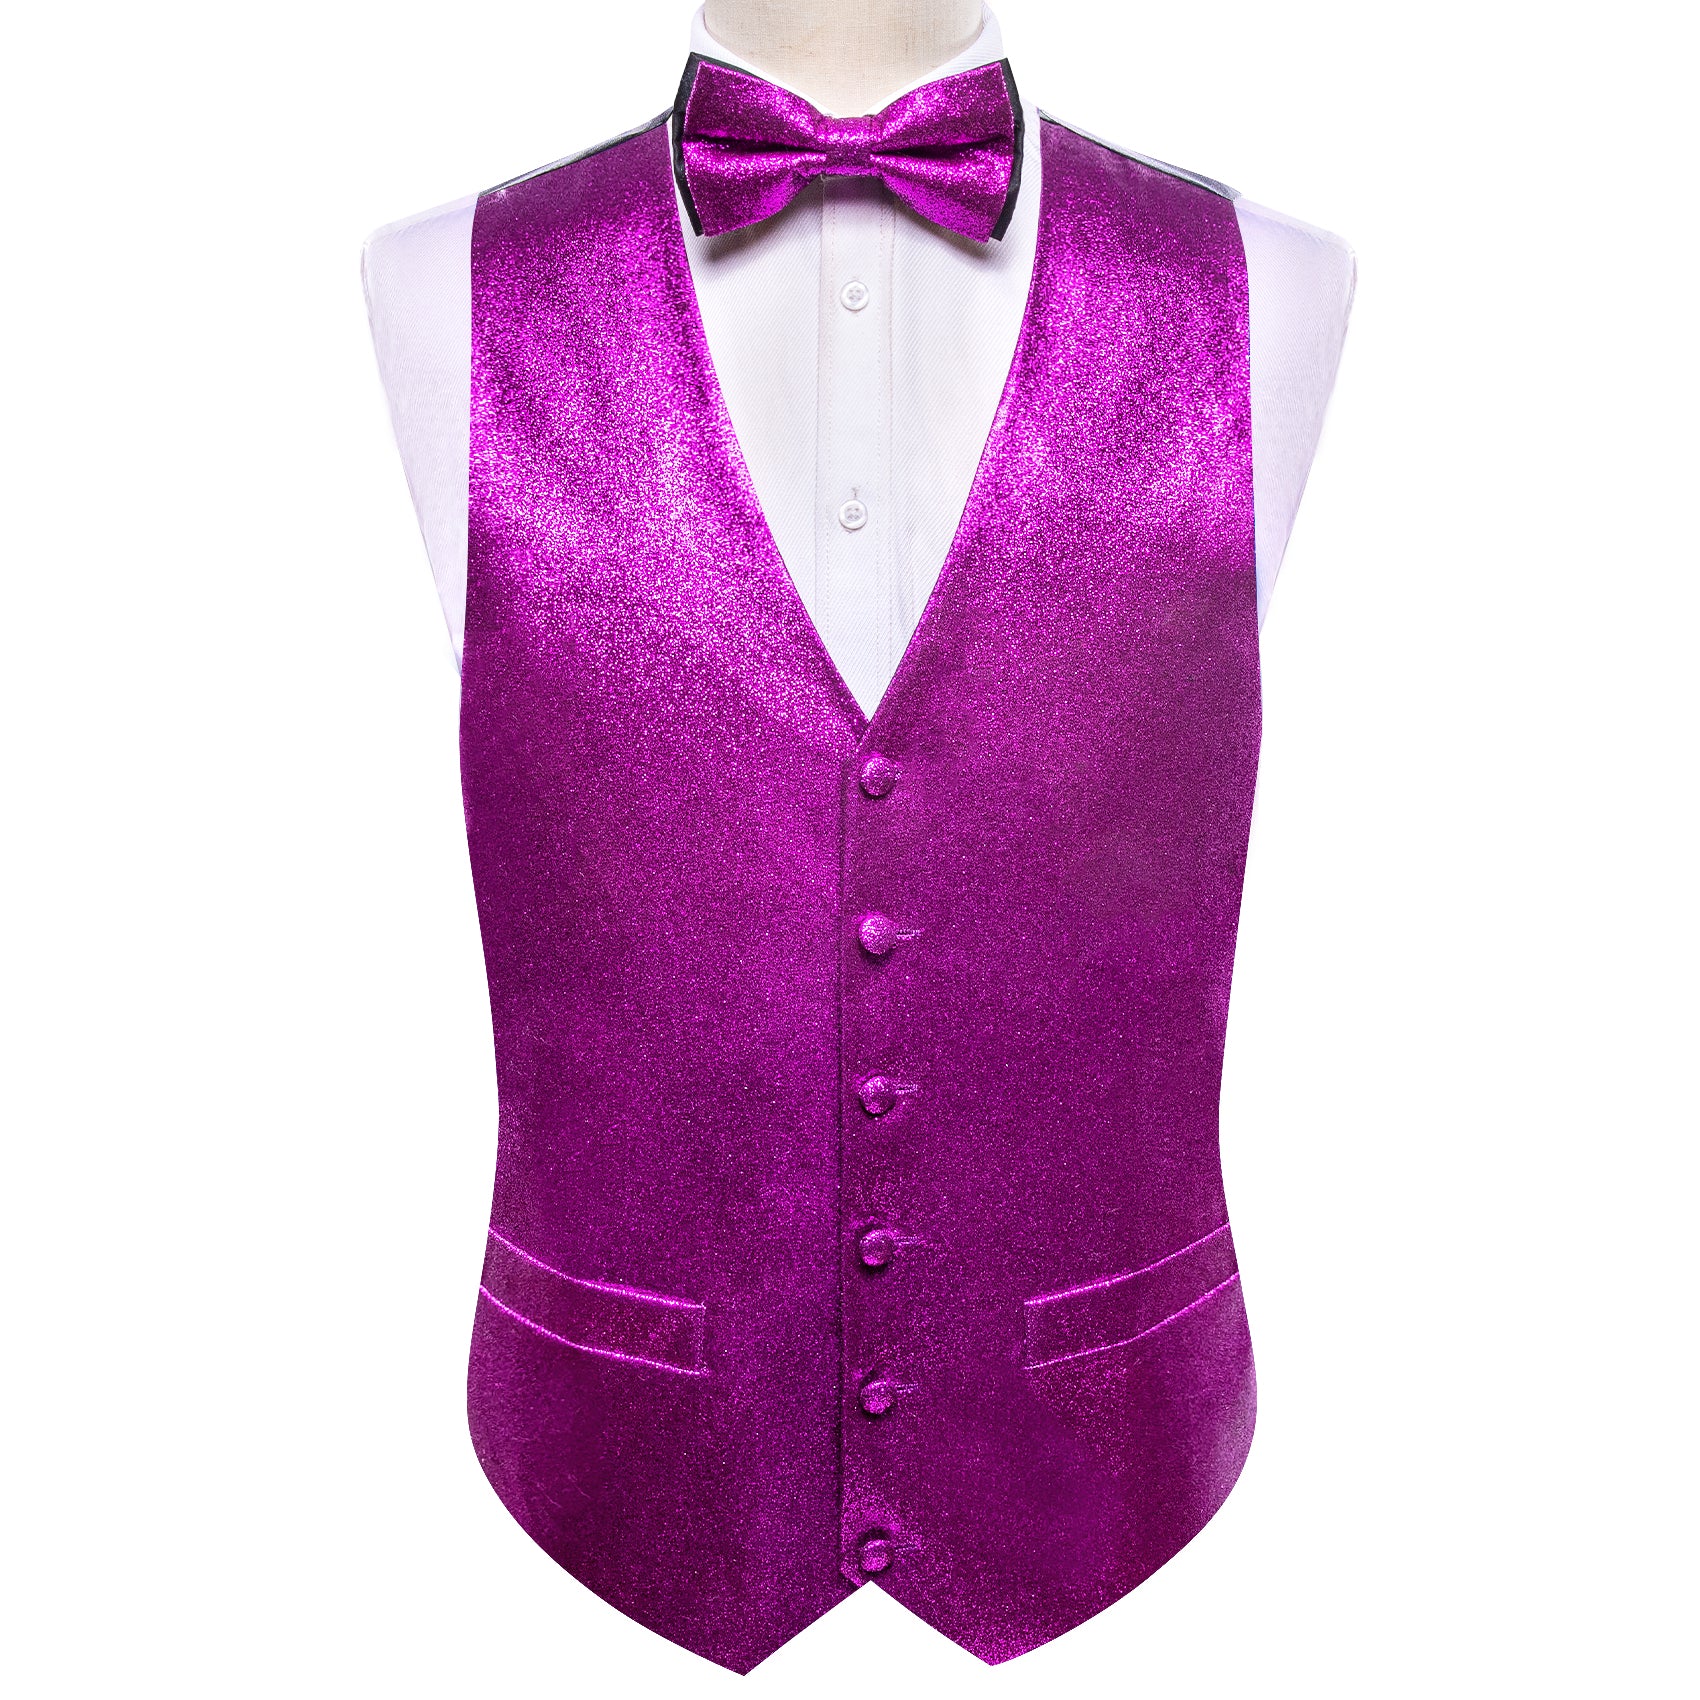 Barry.wang Men's Vest Shining Violet Purple Silk Bowtie V-Neck Waistcoat Vest Set